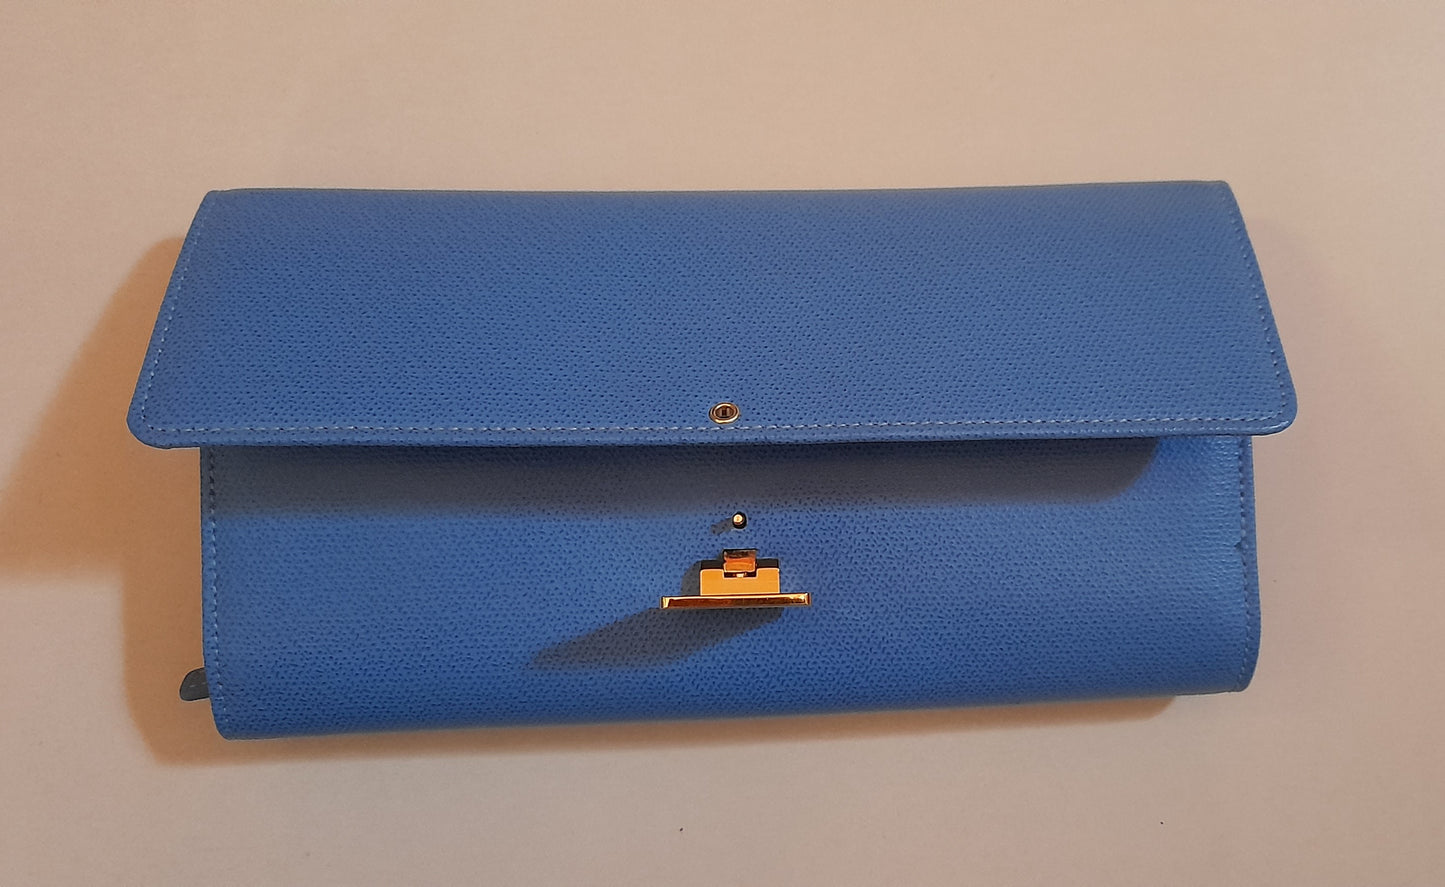 SMYTHSON blue leather jewellery case/wallet